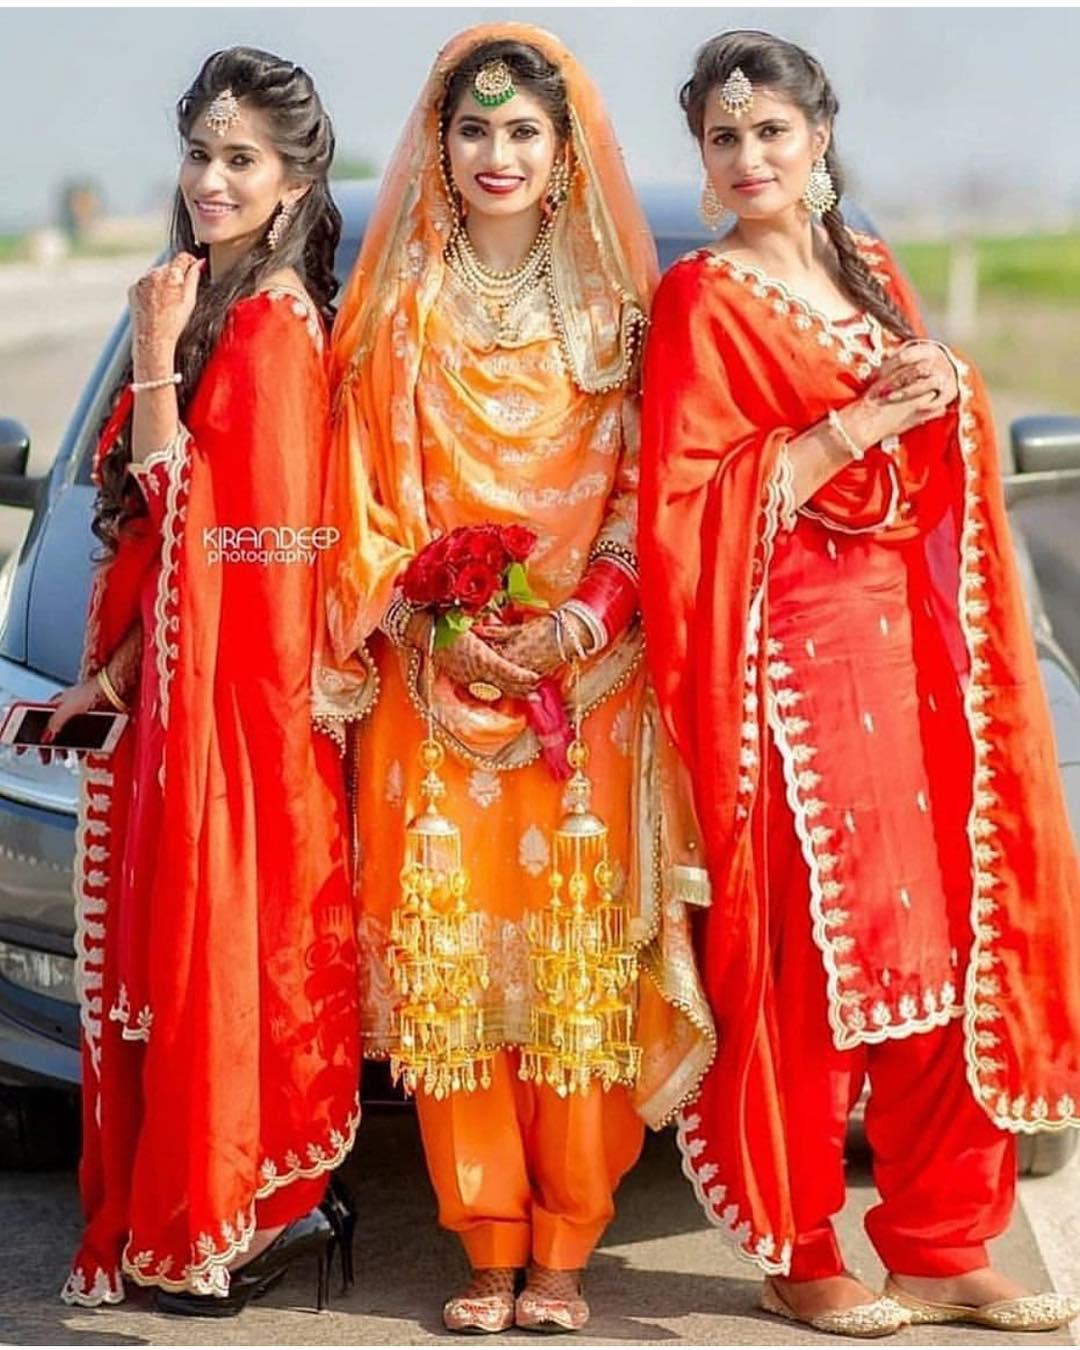 New Punjabi Dhoti Suit/Dress Design Cutting And Stitching Tutorial In Hindi/ Punjabi Chaadra/Dhoti - YouTube